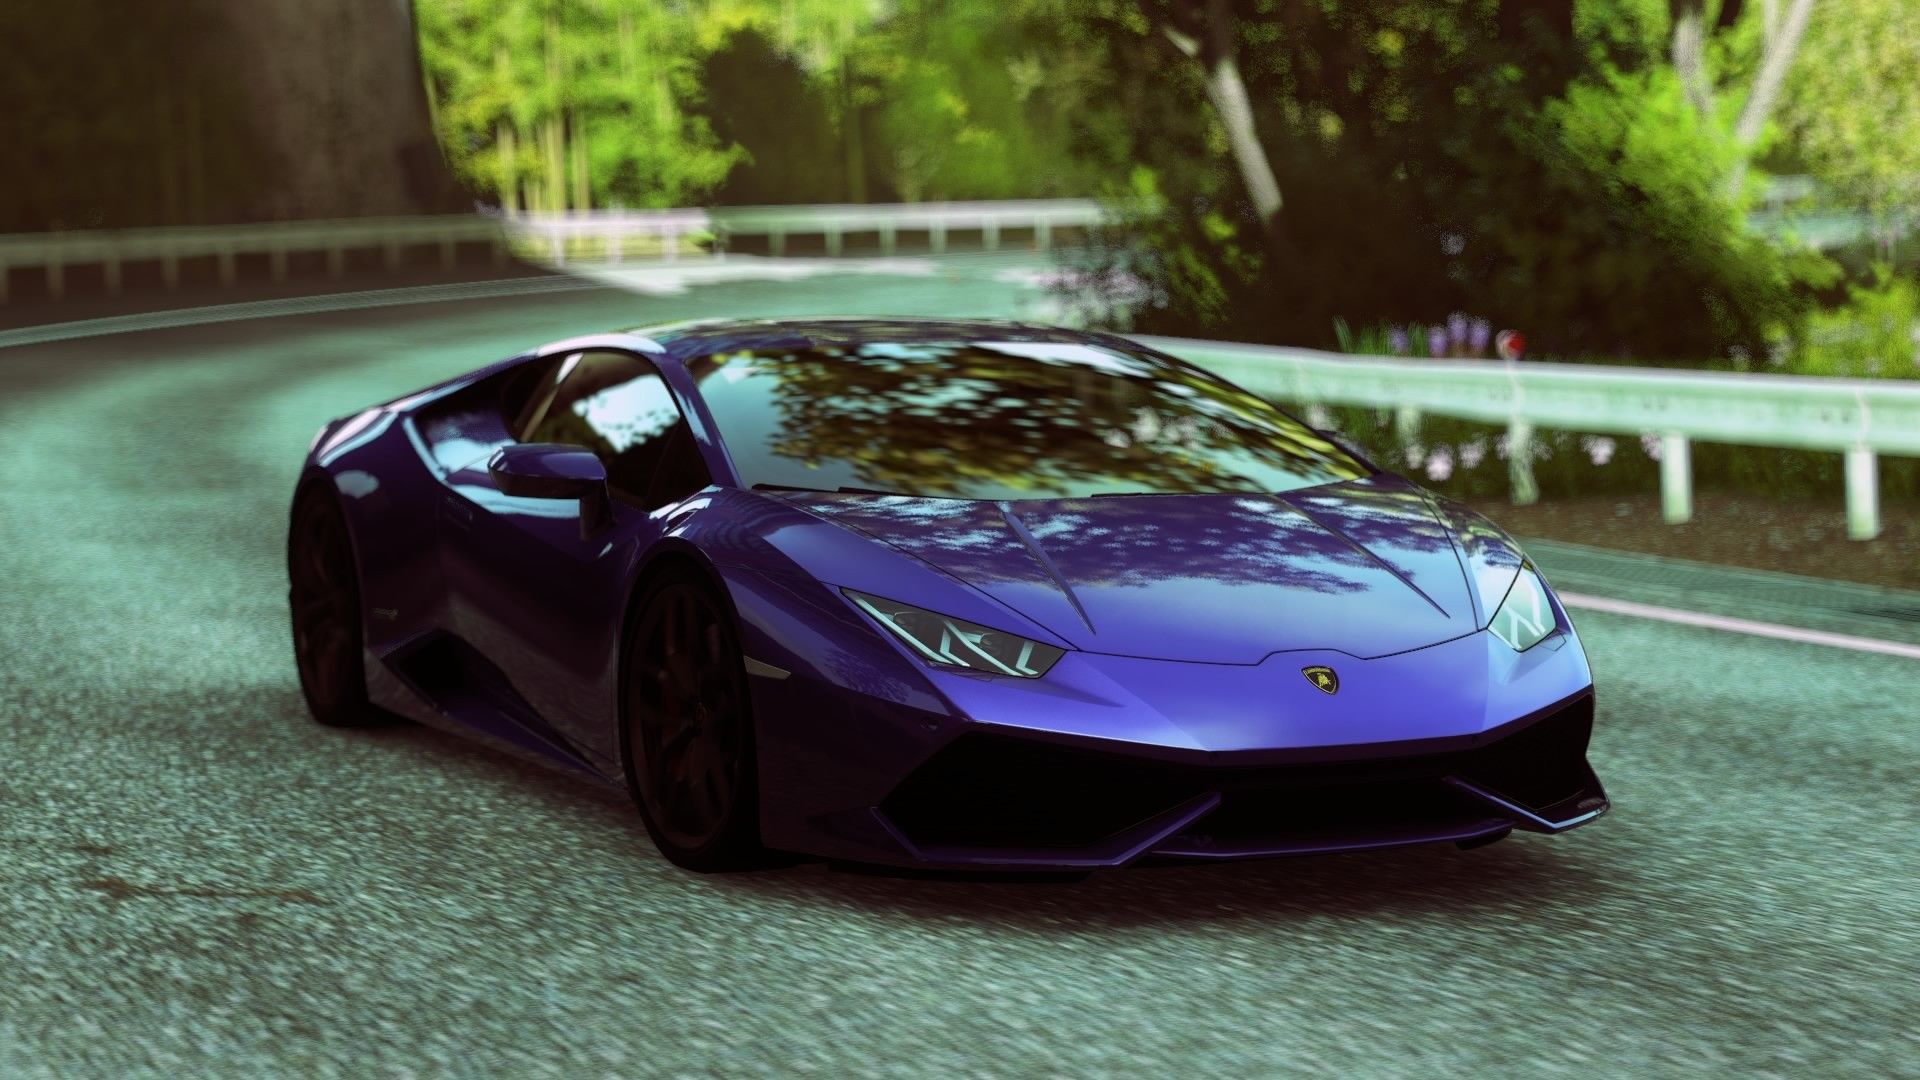 Púrpura Lamborghini Fondos de pantalla Imágenes Fotos Imágenes Fondos